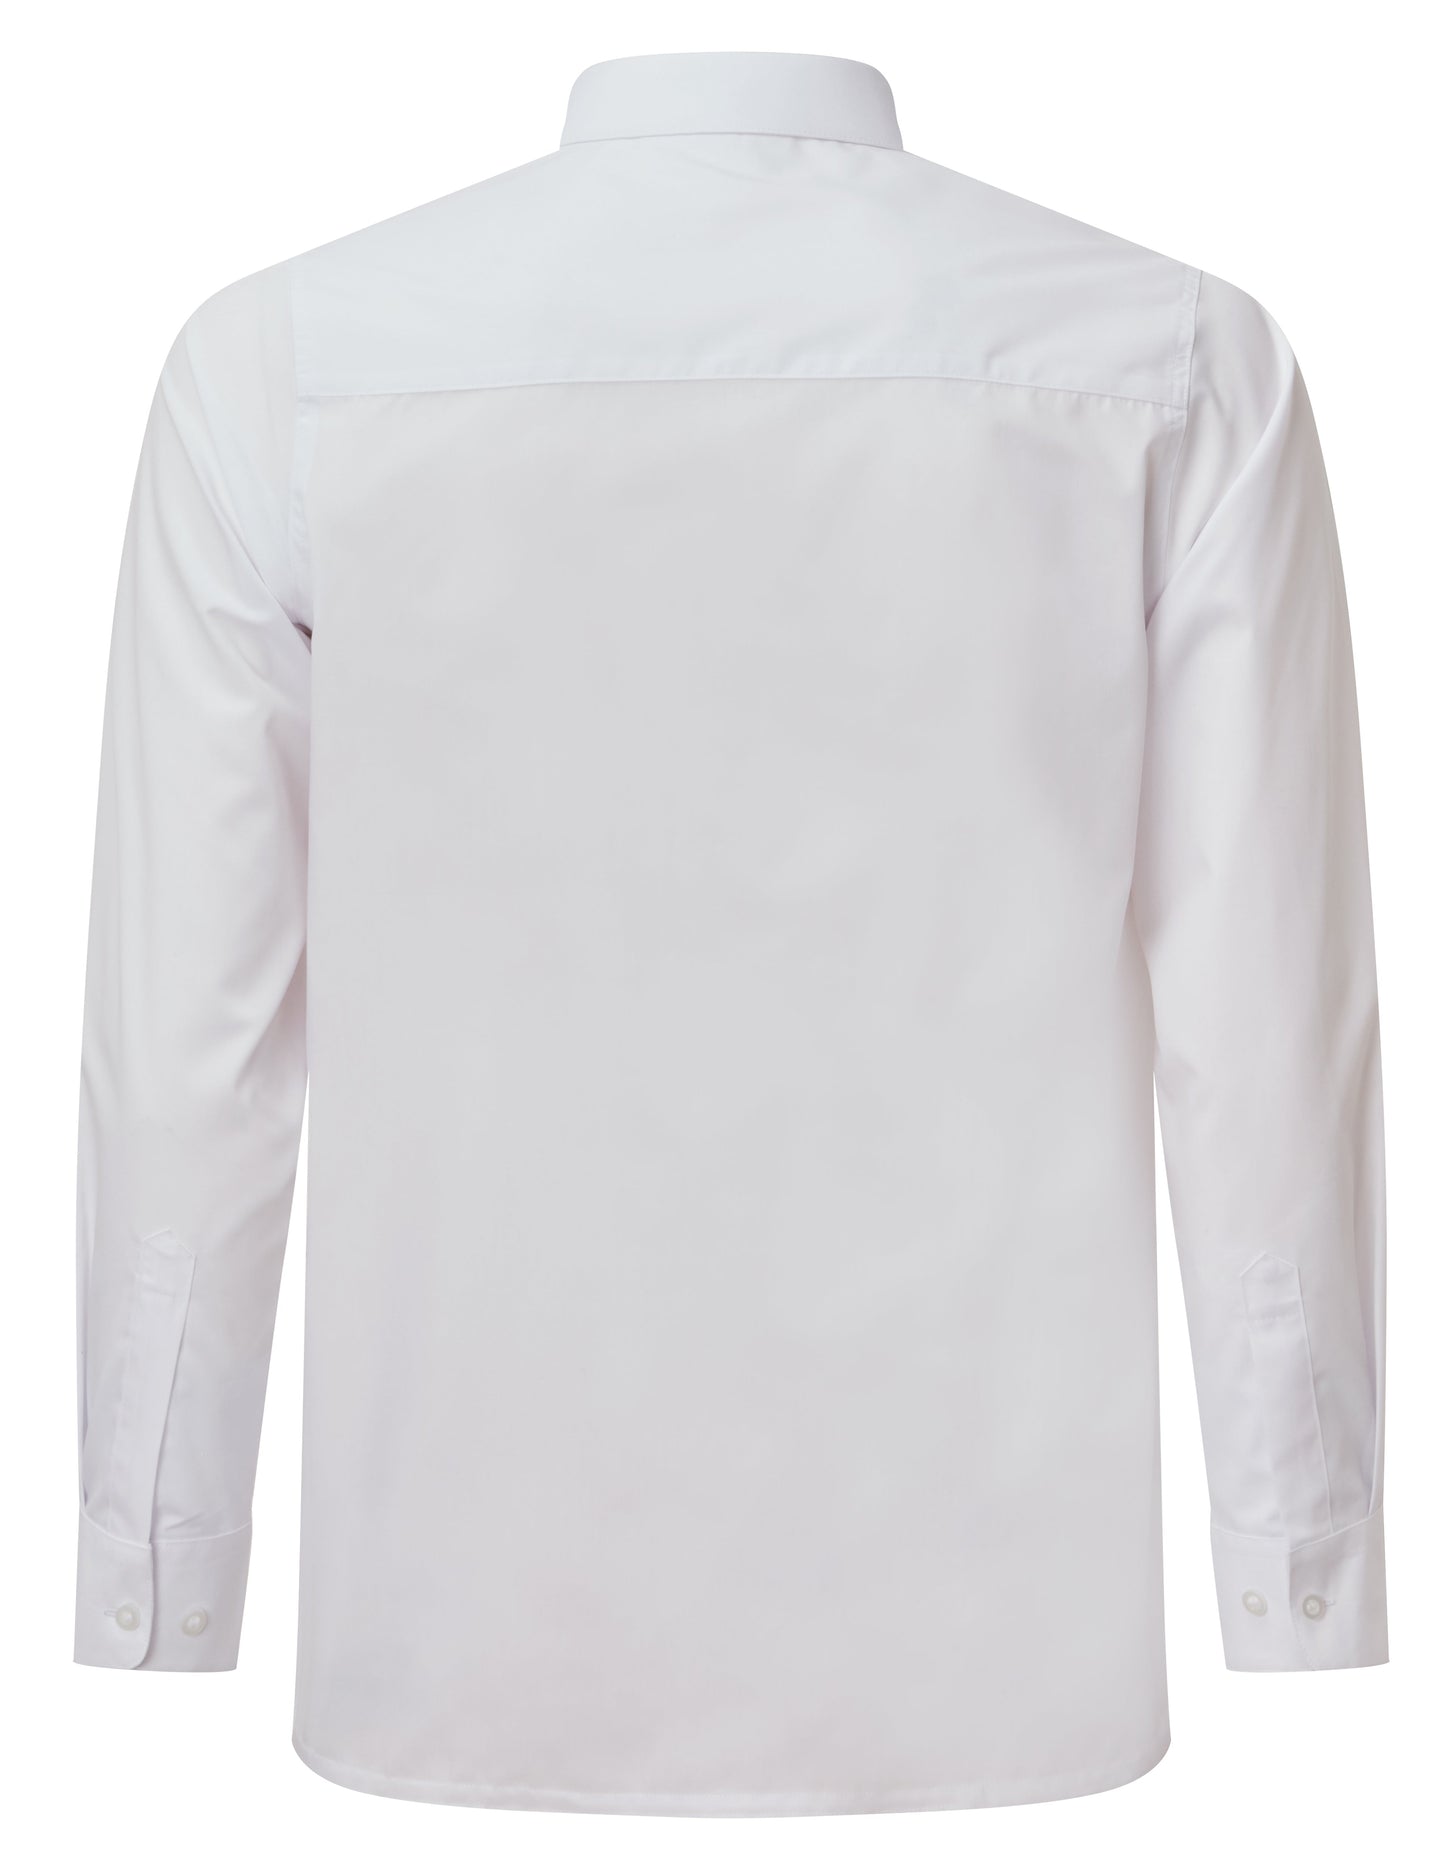 White- Boys' Long Sleeve Shirt (Twin Pack)